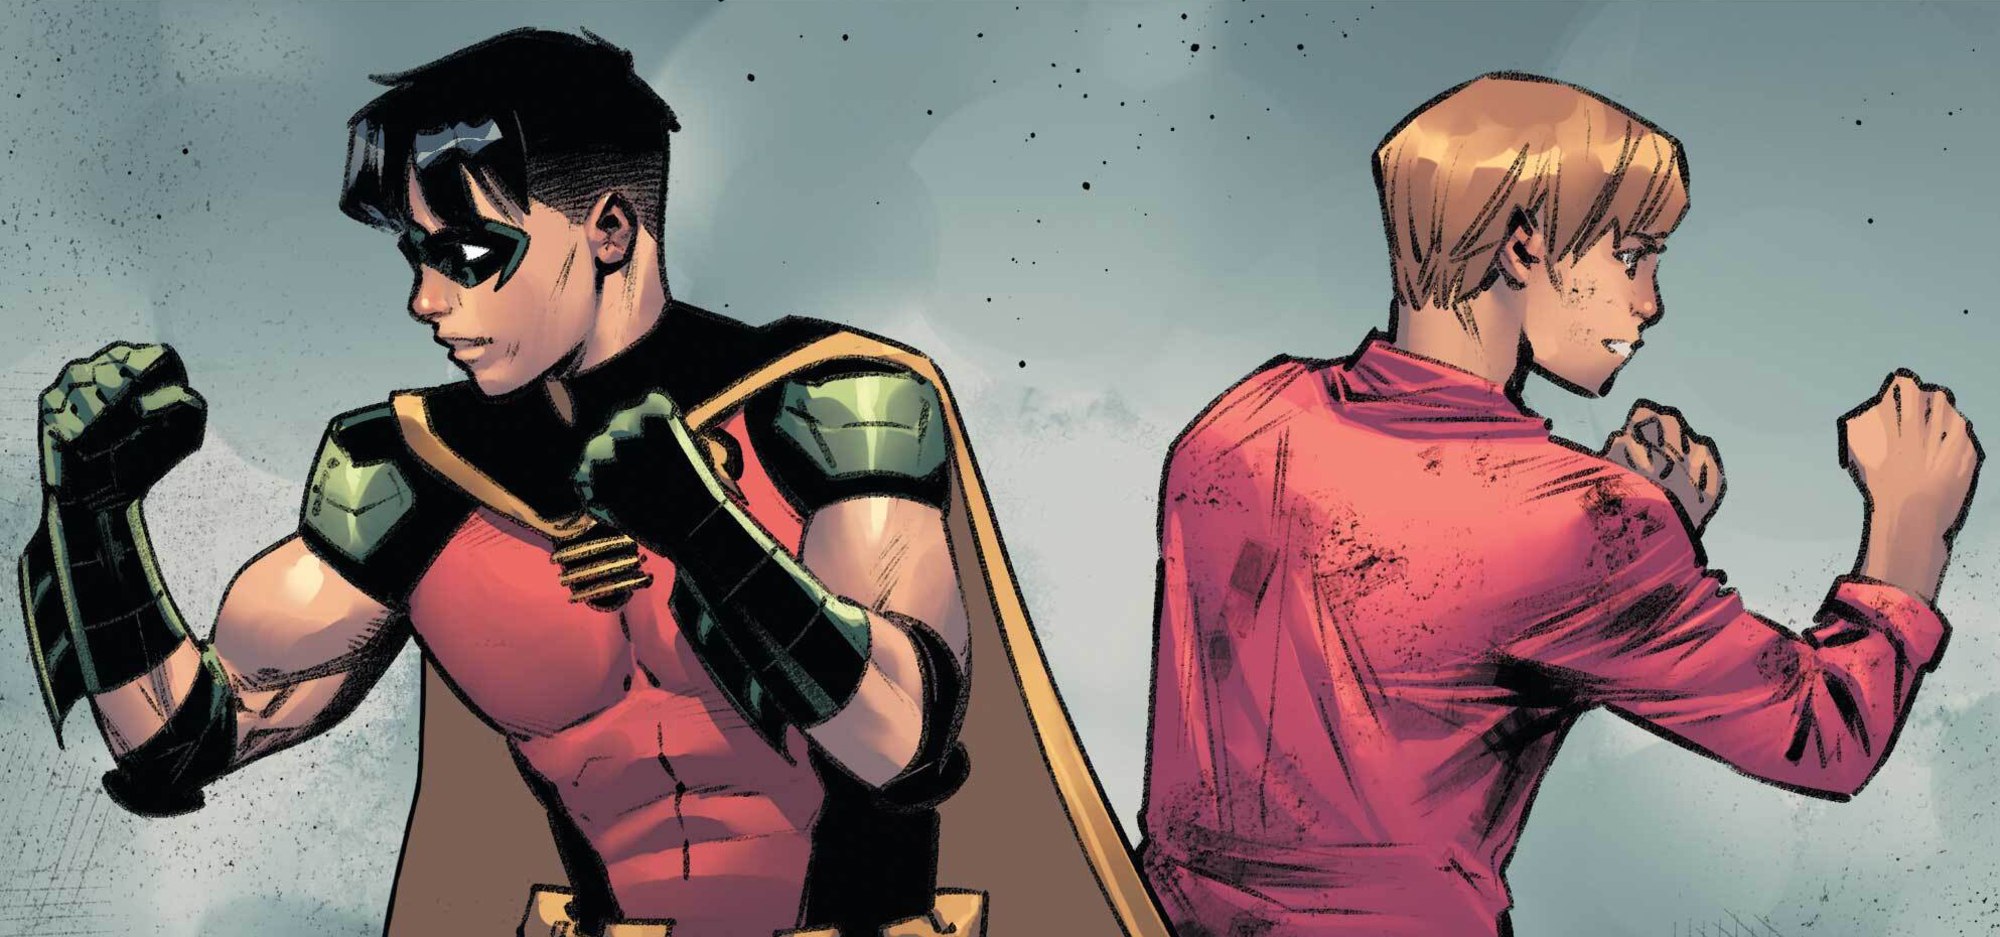 Batman sidekick Robin comes out as bisexual